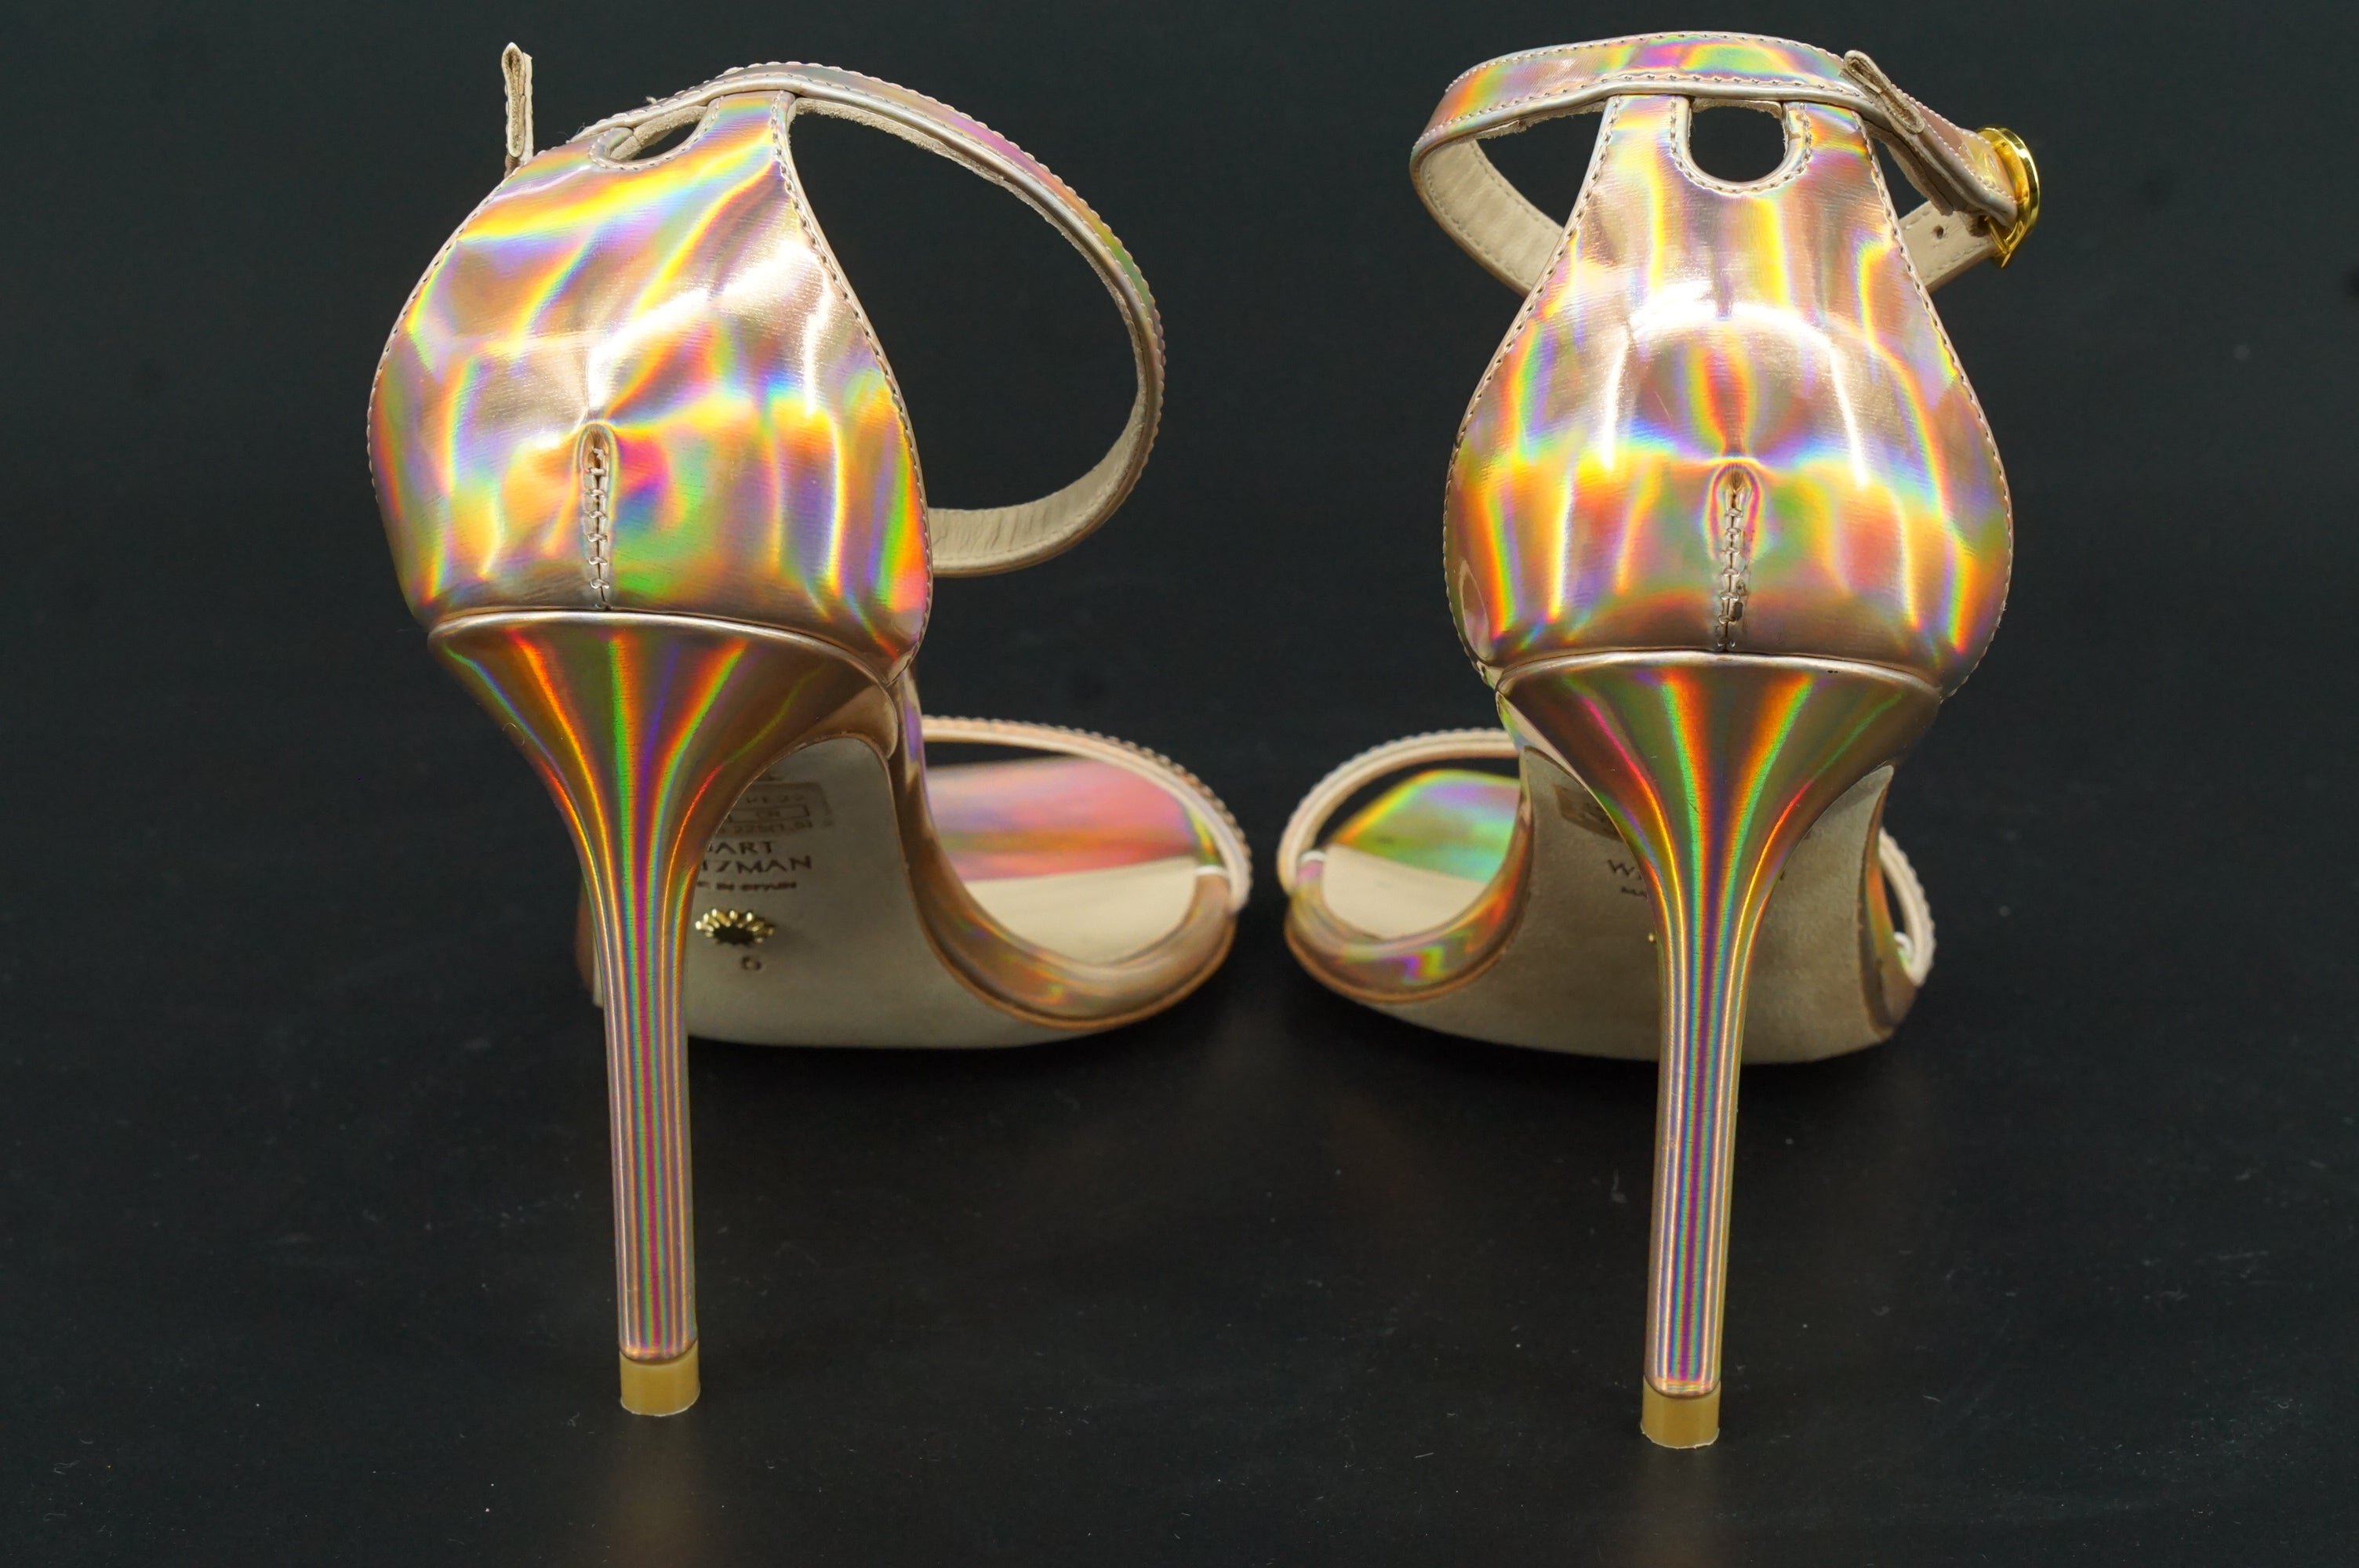 Stuart Weitzman Nudistcurve 100 Hologram Ankle Strappy Sandals Size 5 $475 pink